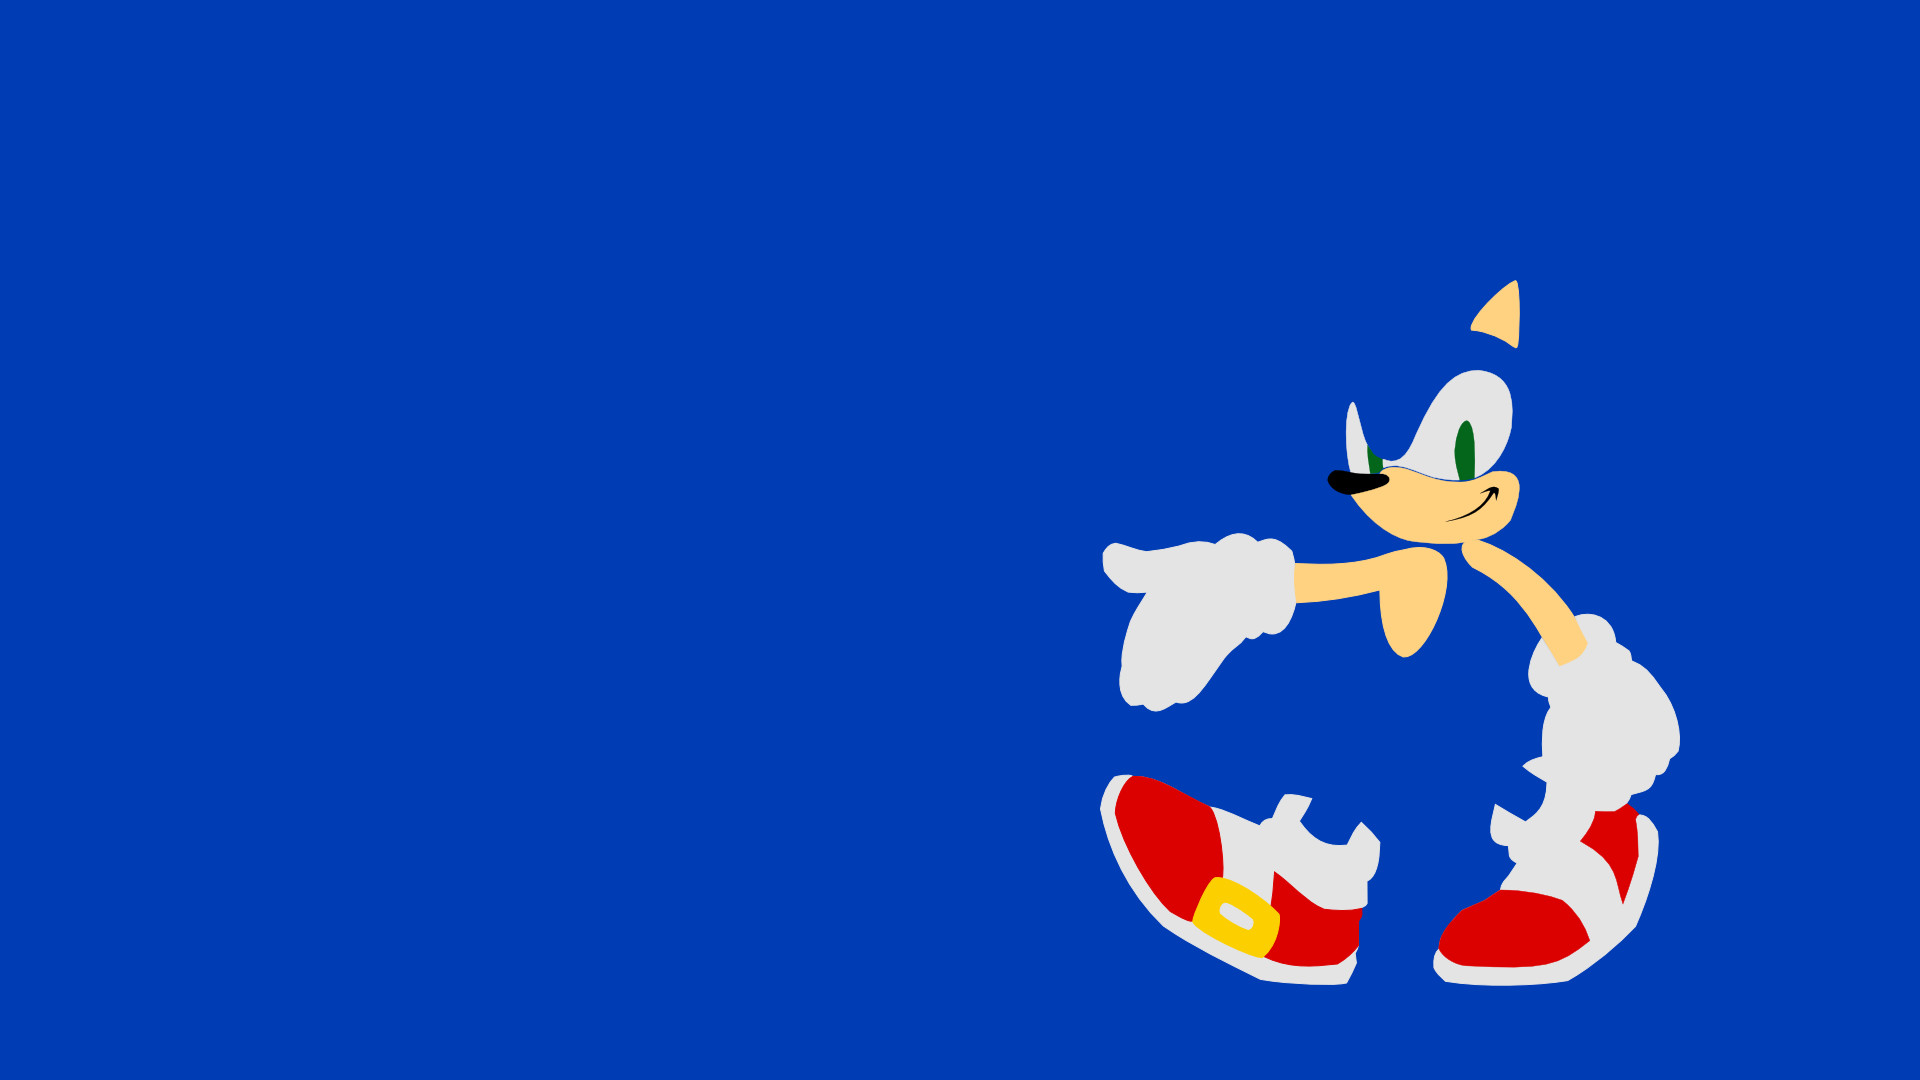 Sonic the Hedgehog Final Wallpaper Background by 9029561 on DeviantArt